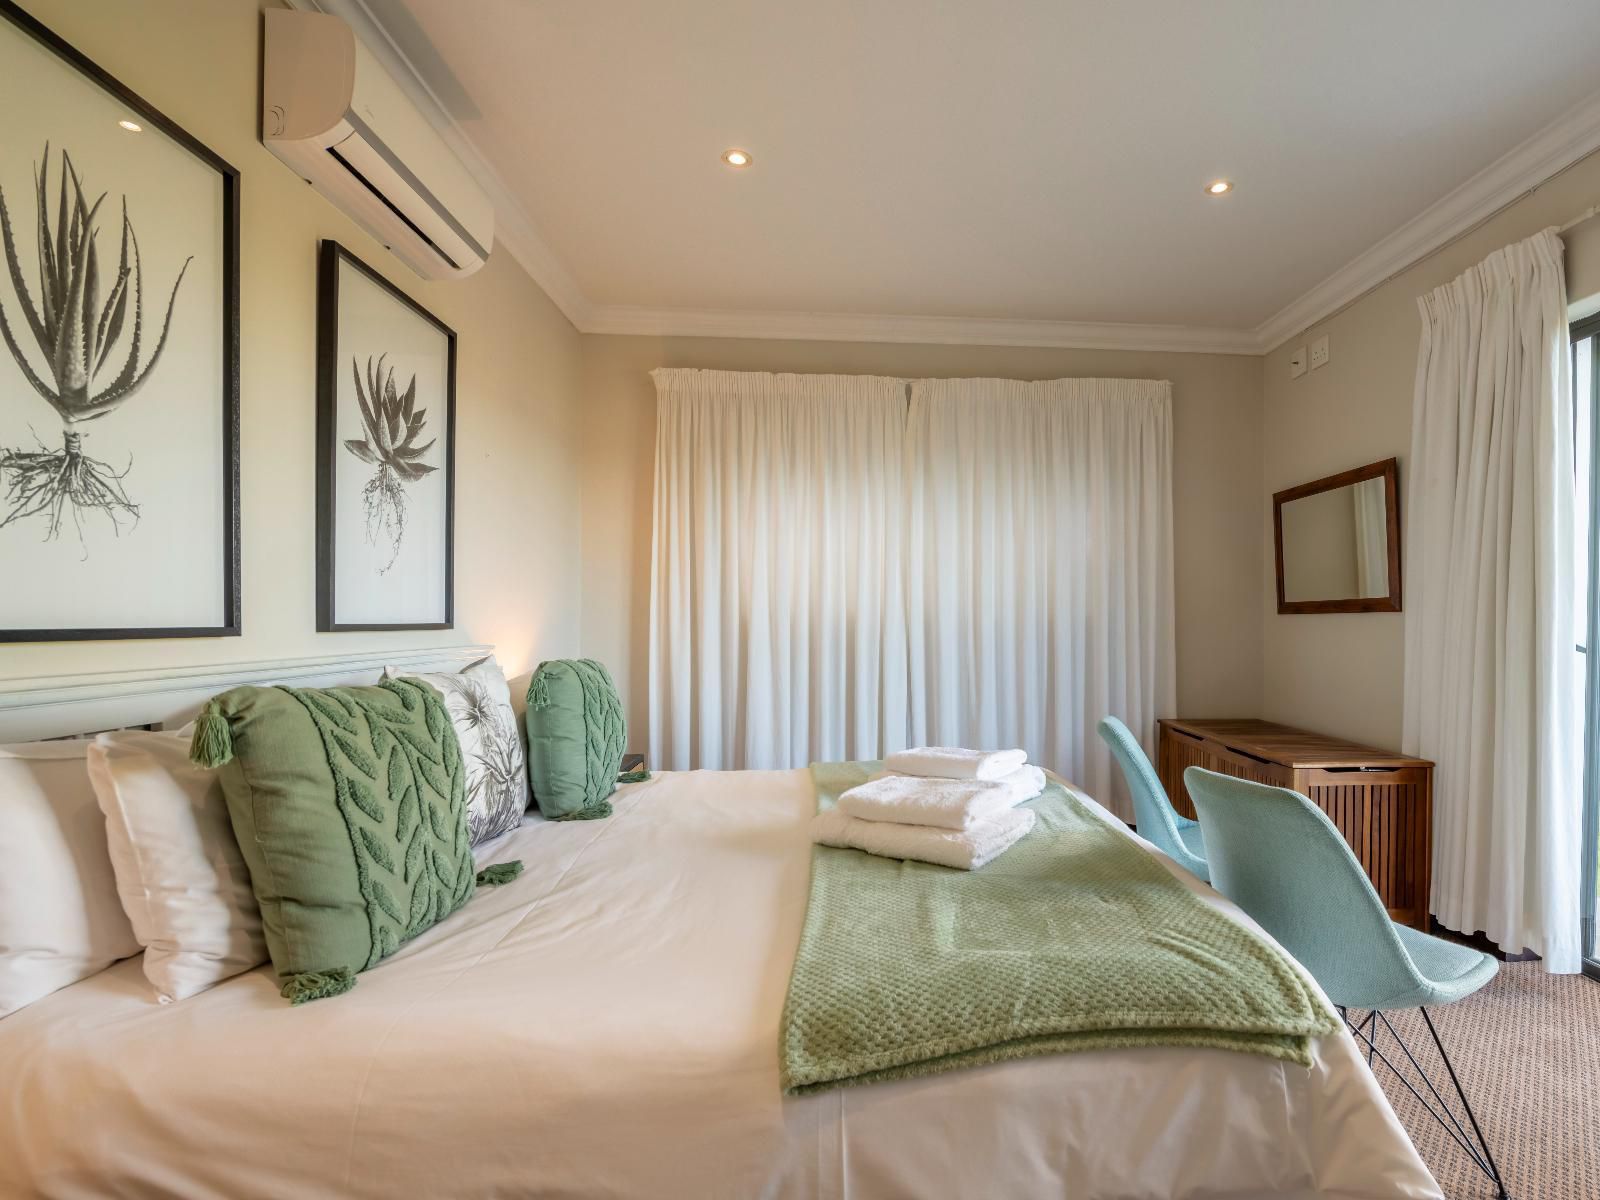 6 On Protea Paradise Knysna Western Cape South Africa Bedroom